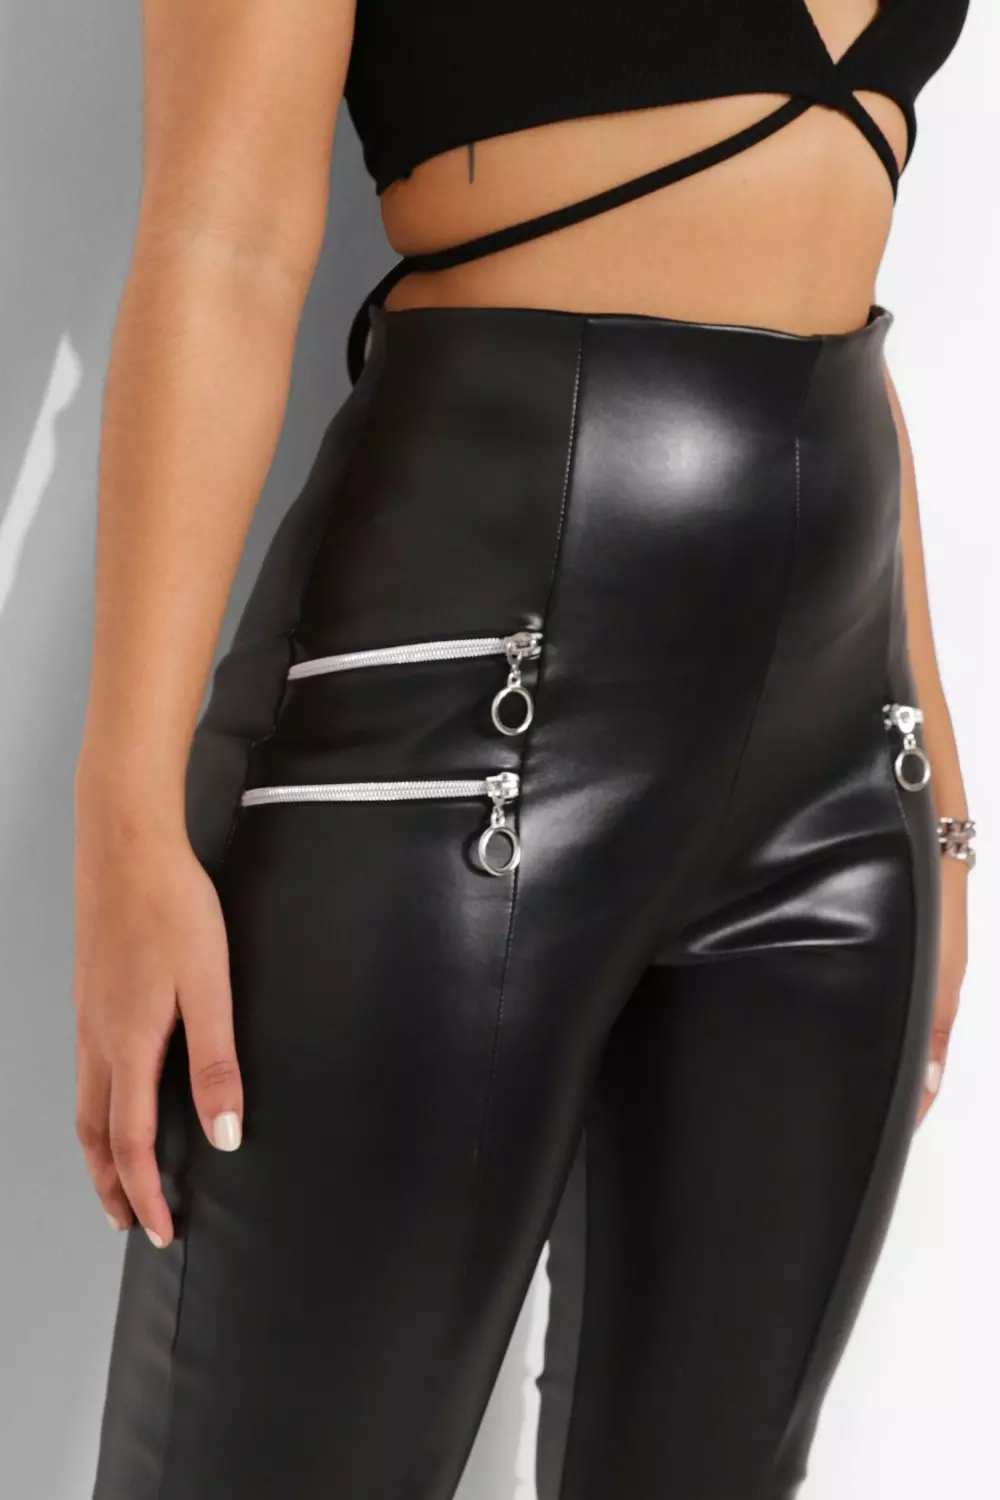  Women Back Zipper Leather Leggings, High Waisted PU